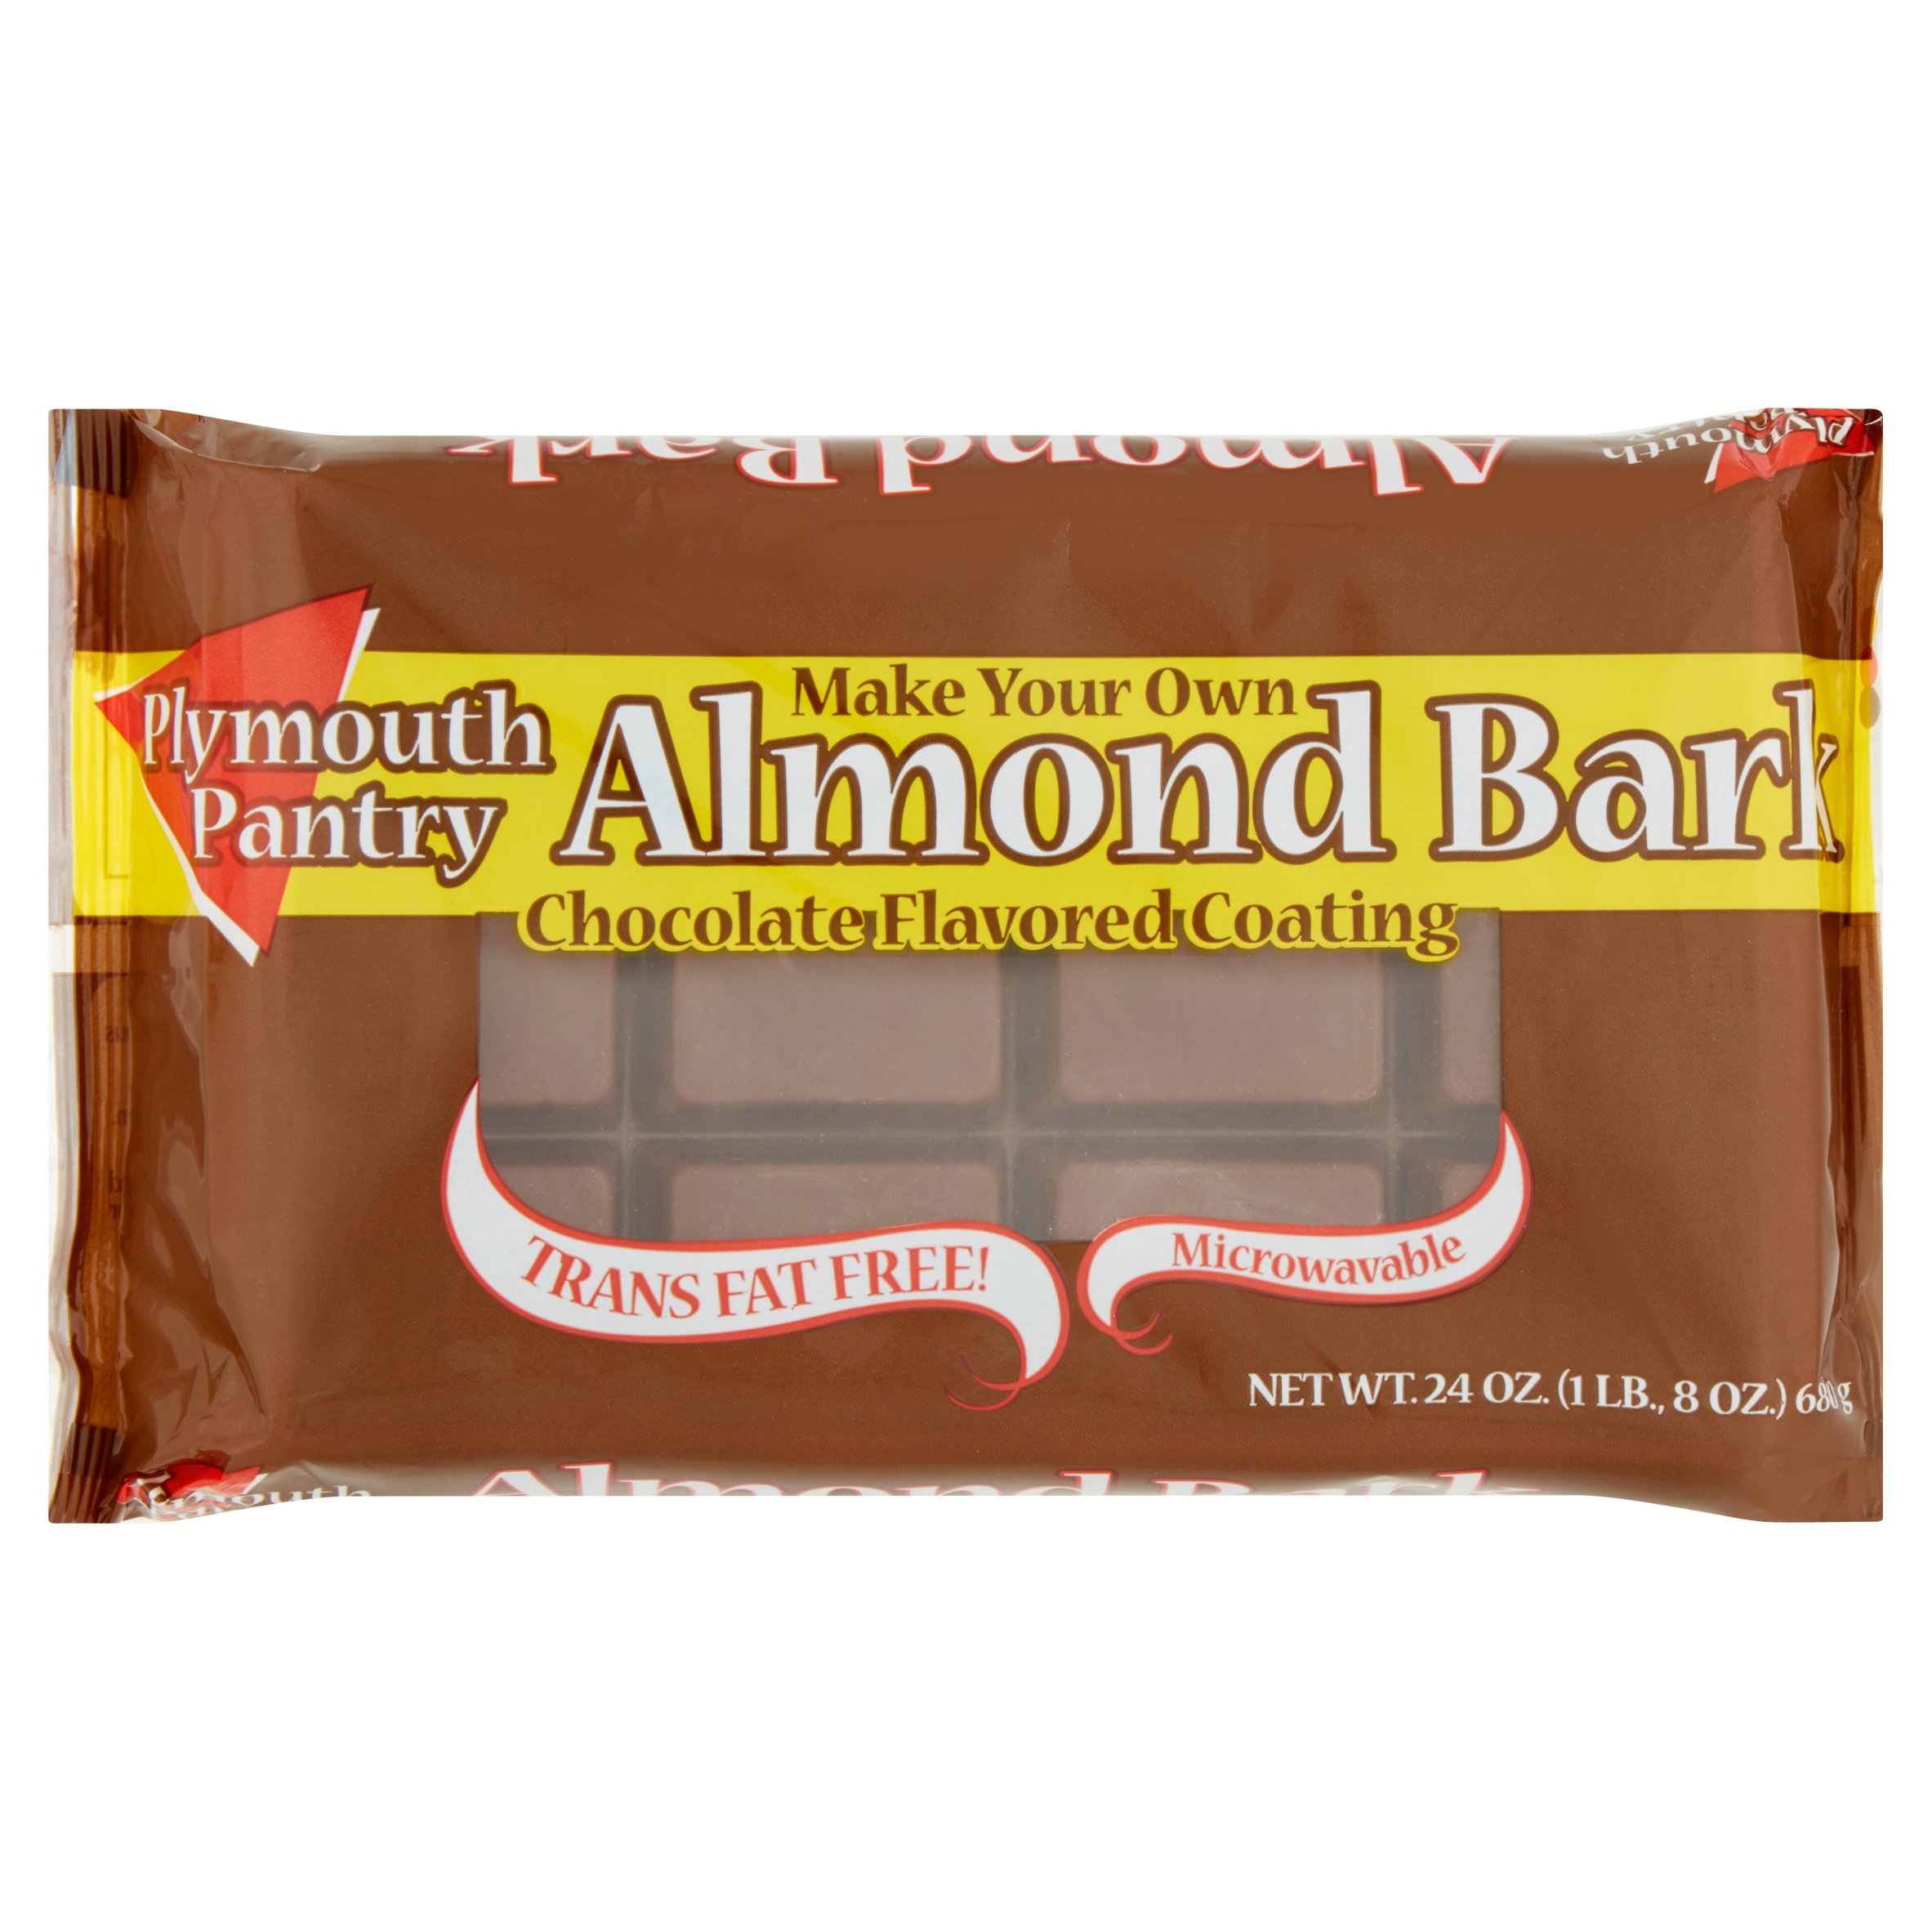 Plymouth Pantry Almond Bark Chocolate Baking Bar, 24 oz - image 1 of 5